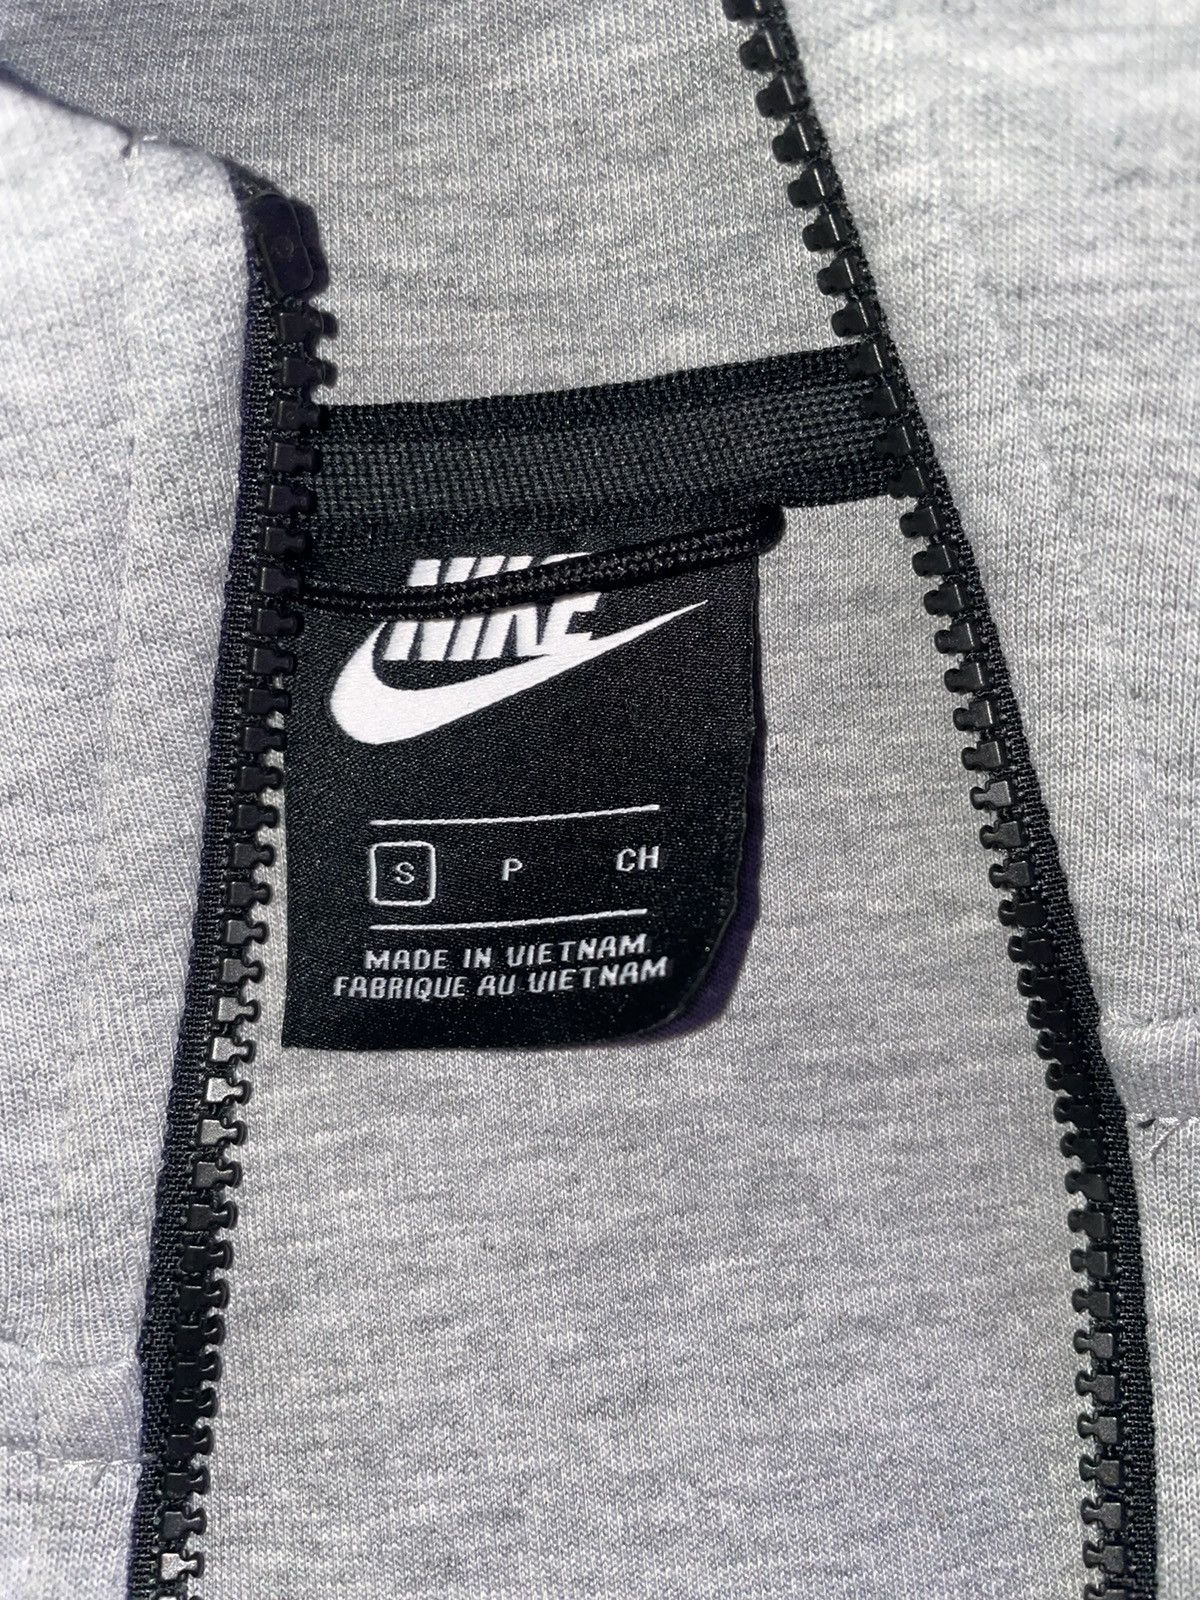 Nike Nike tech hoodie Size US S / EU 44-46 / 1 - 4 Thumbnail